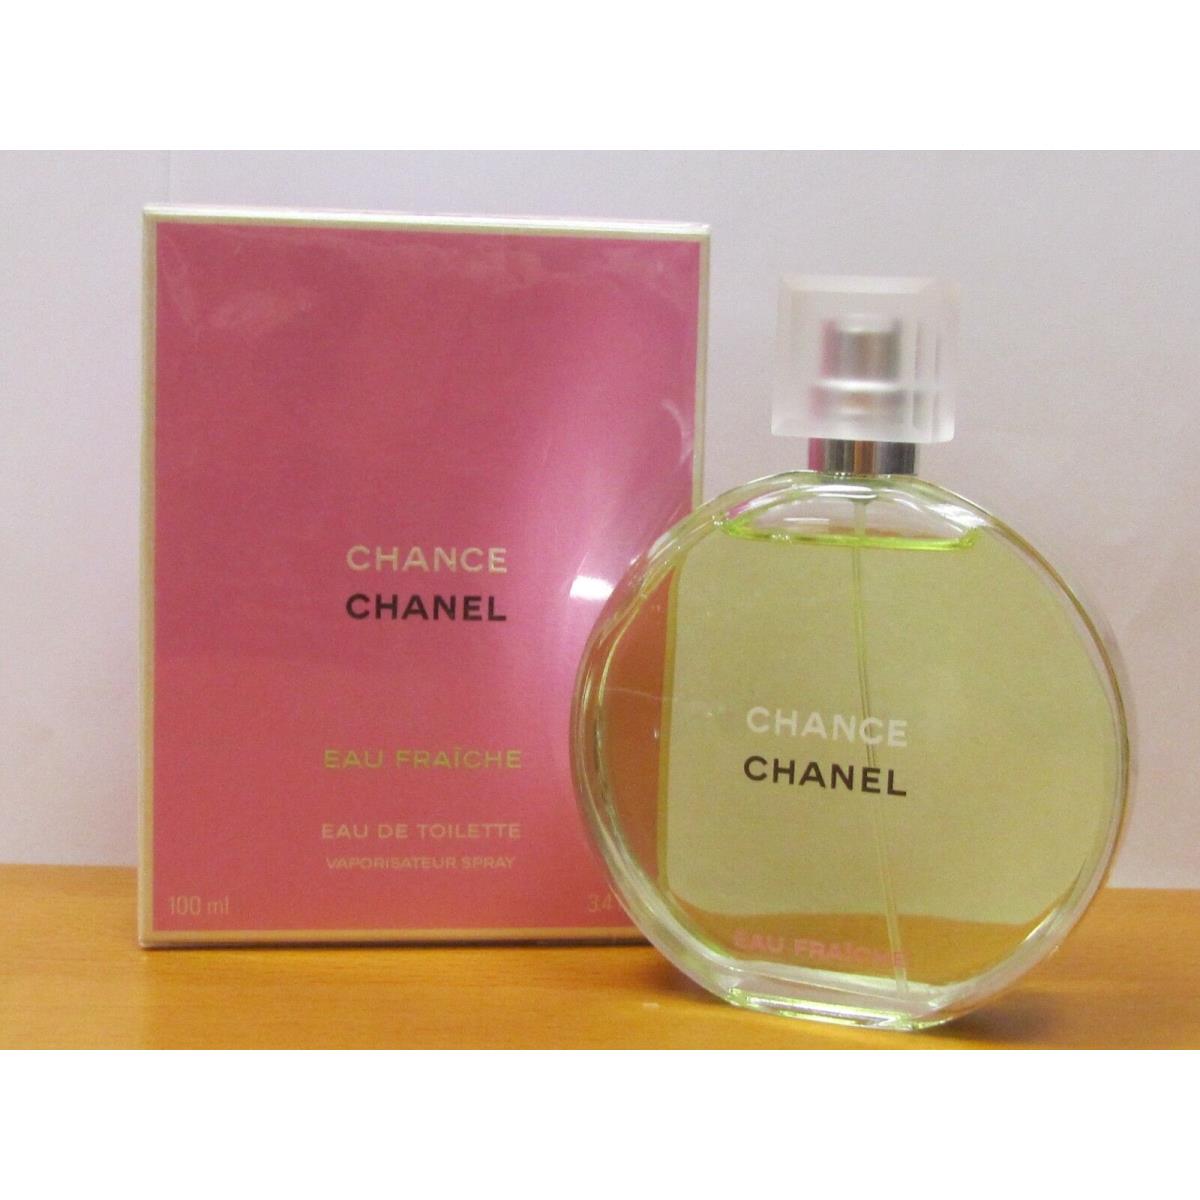 Chance Chanel Eau Fraiche By Chanel Perfume Women 3.4 oz Eau De ...